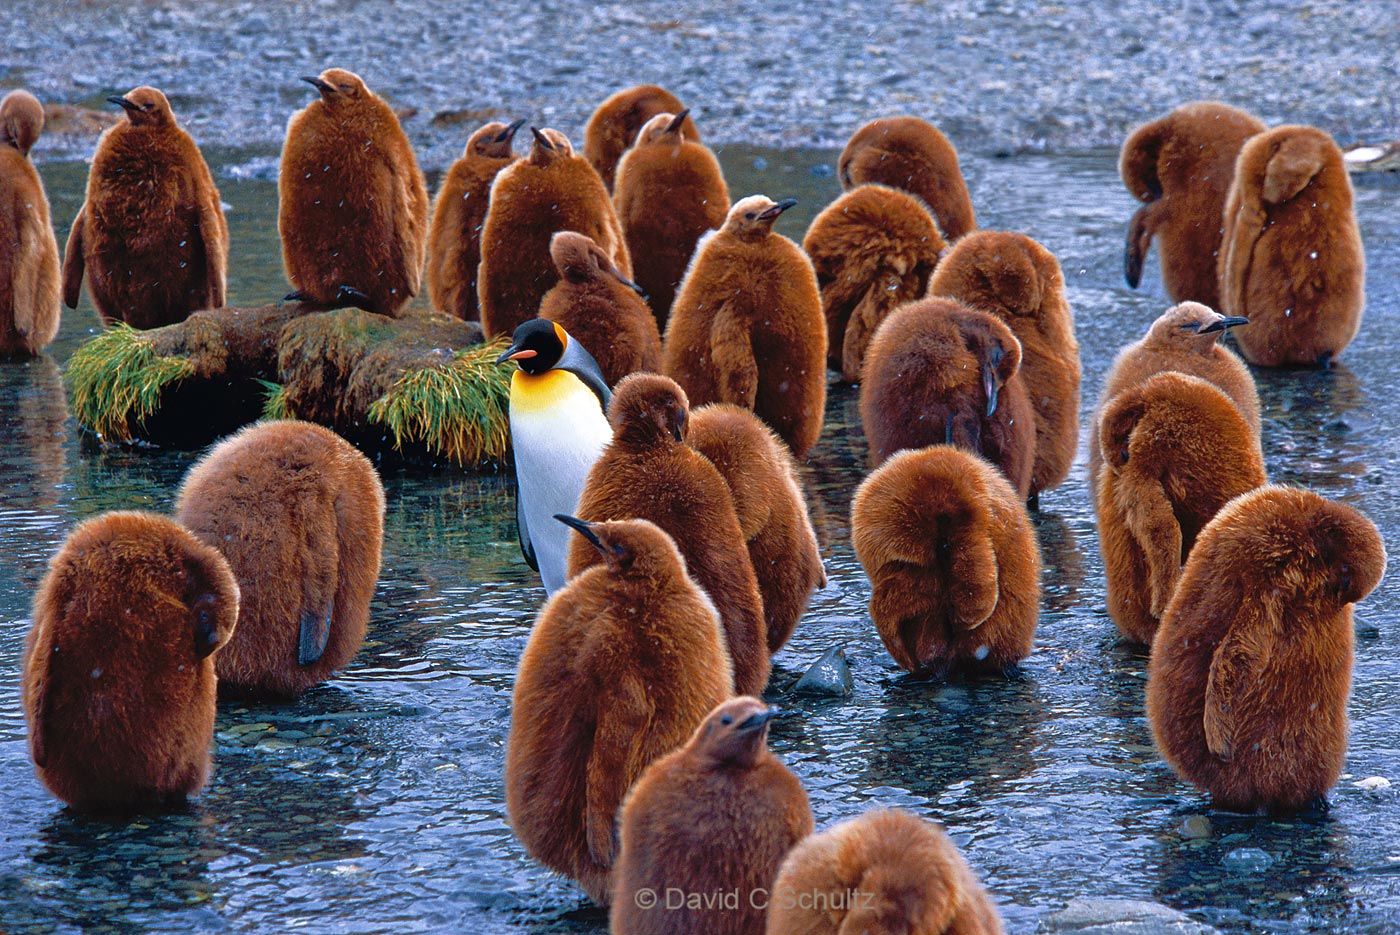 King penguins on South Georgia Island - Image #163-150